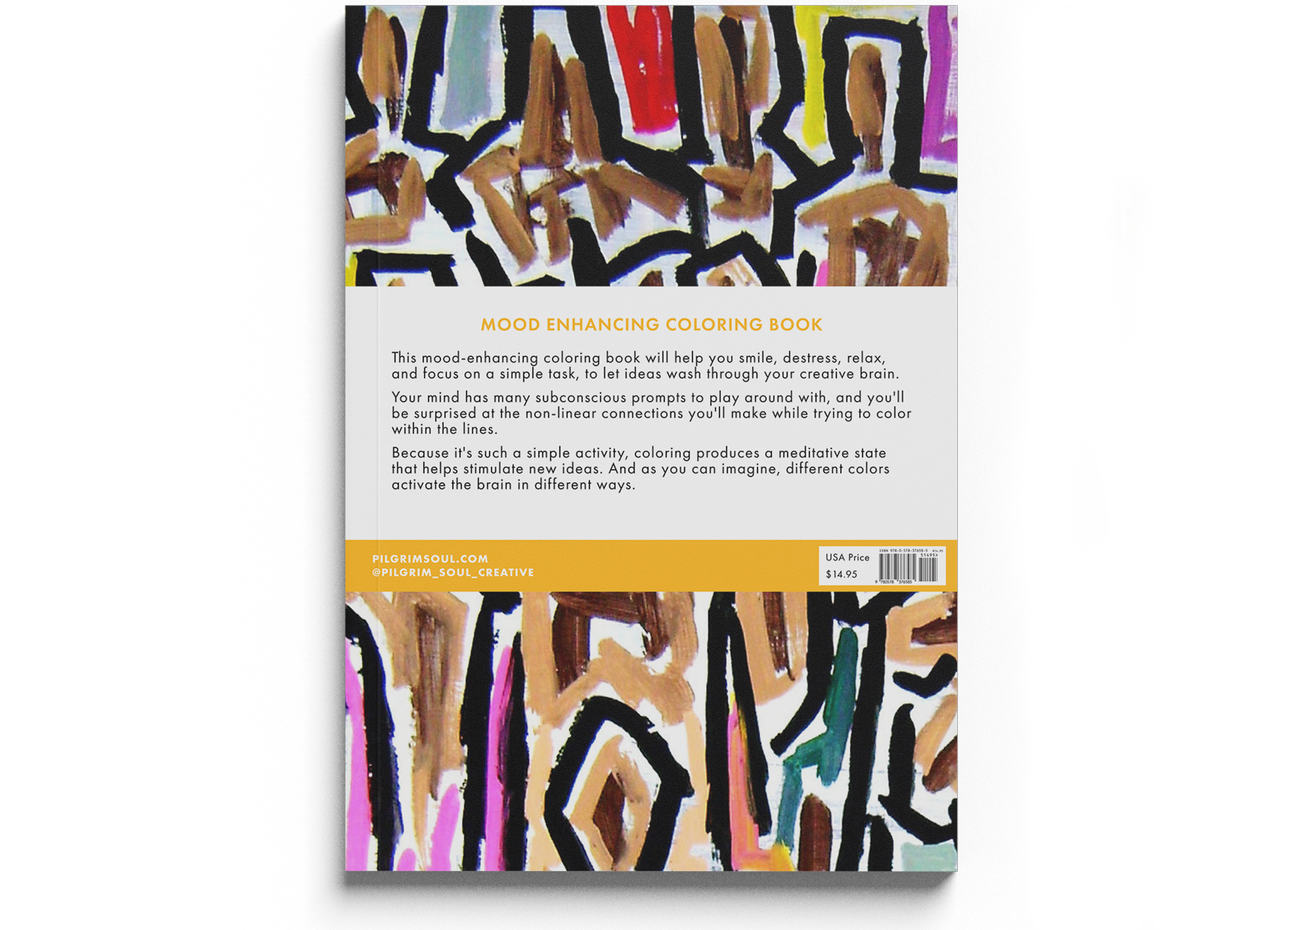 Coloring Book Vol 1 + Creative Thinking Journal Vol 2 + Pencil Set